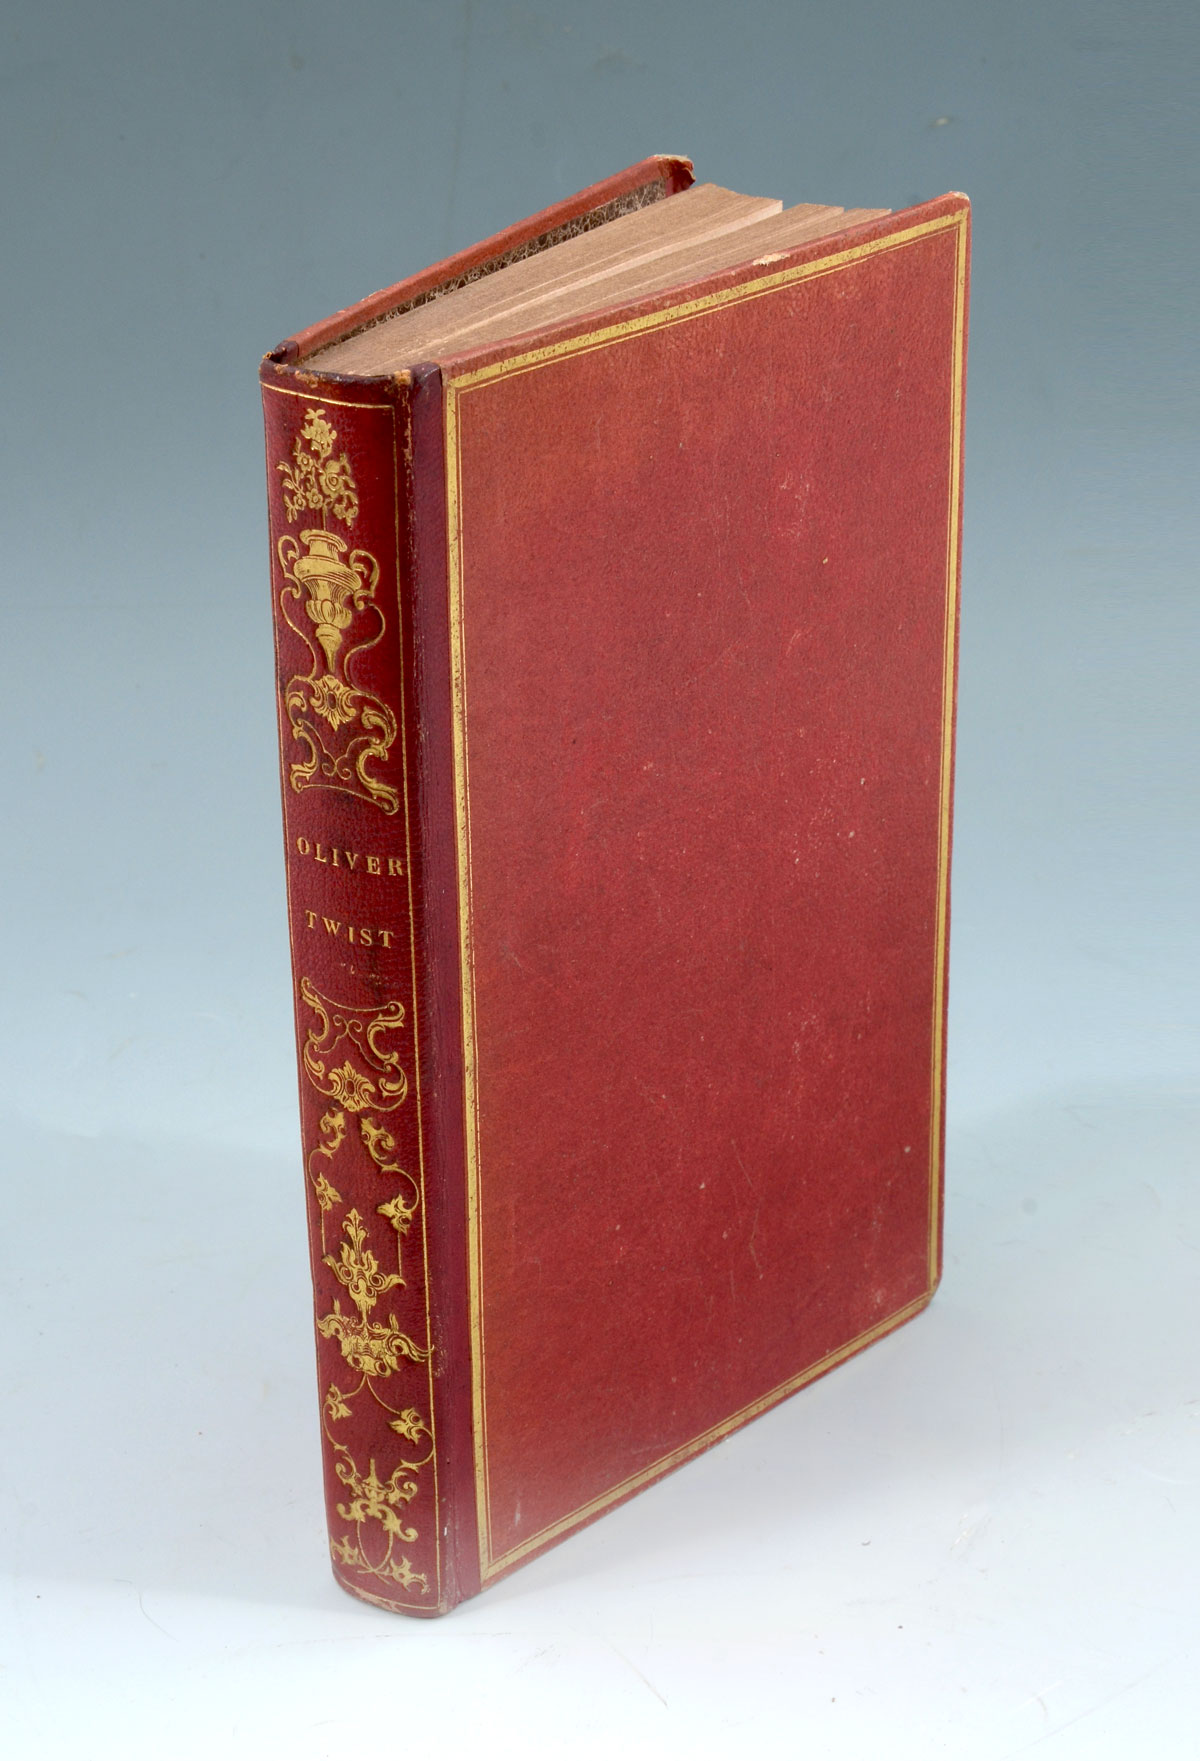 1839 OLIVER TWIST BOOK: Parisian